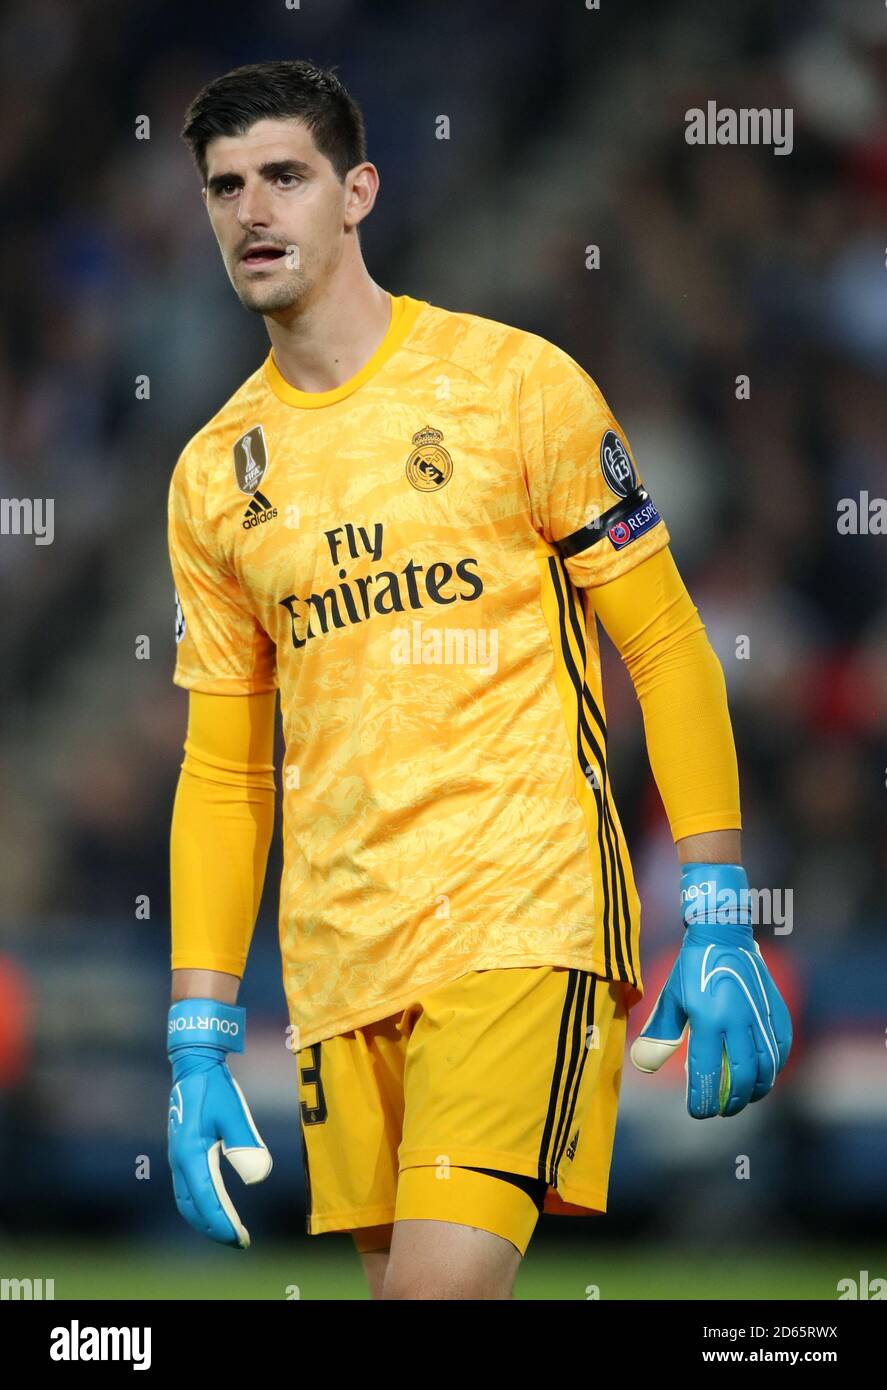 Portero del Real Madrid, Thibaut Courtois Fotografía de stock - Alamy